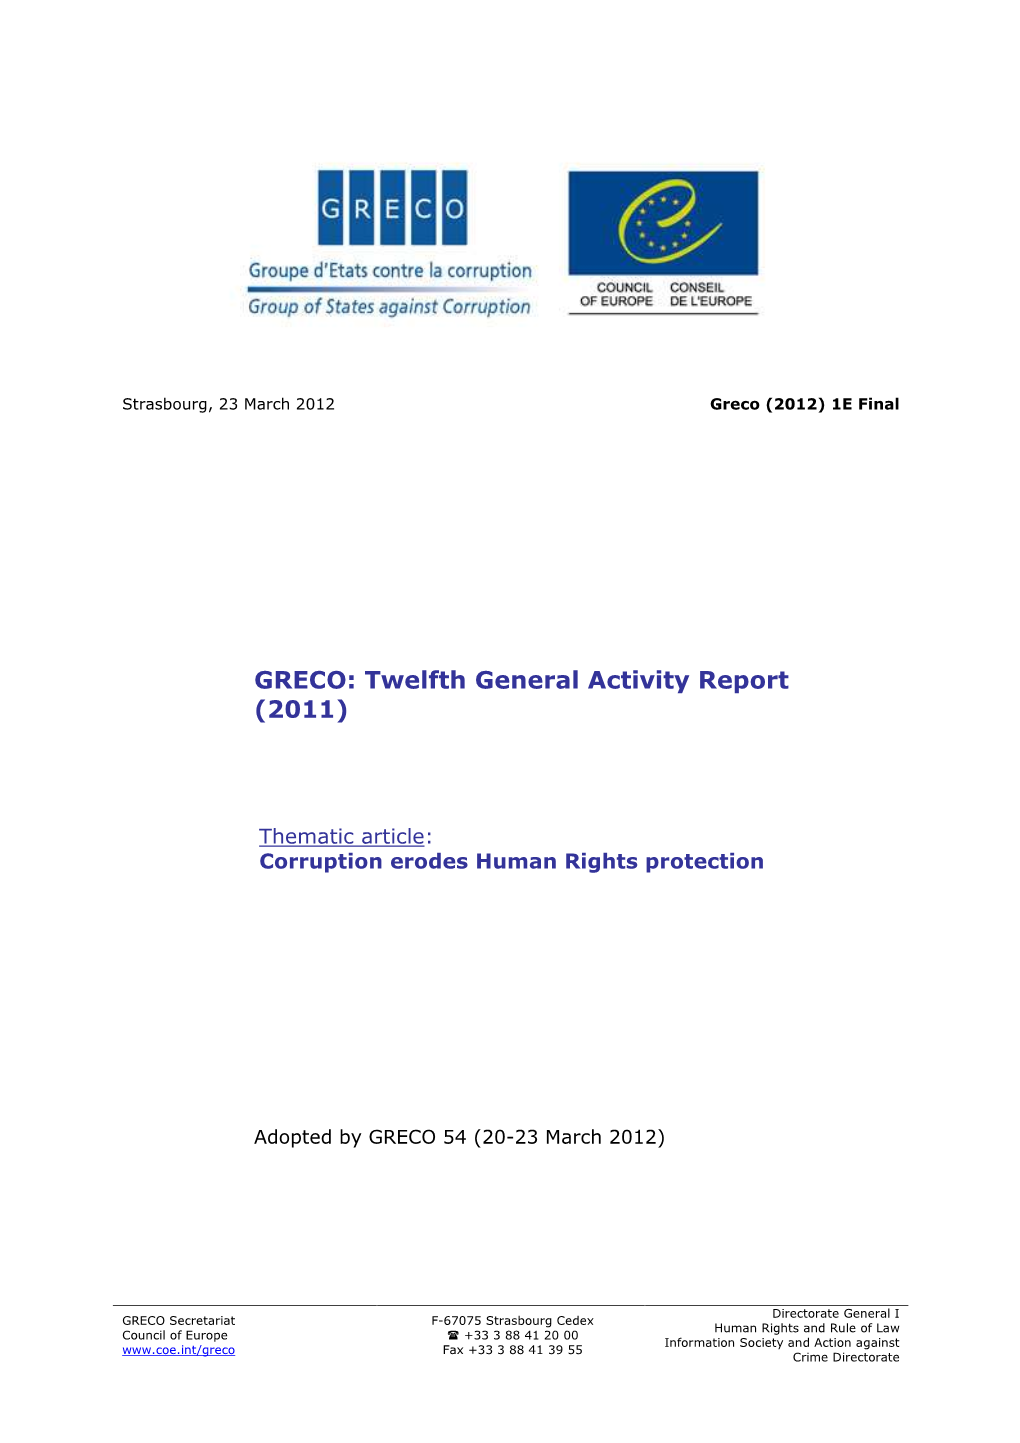 GRECO: Twelfth General Activity Report (2011)